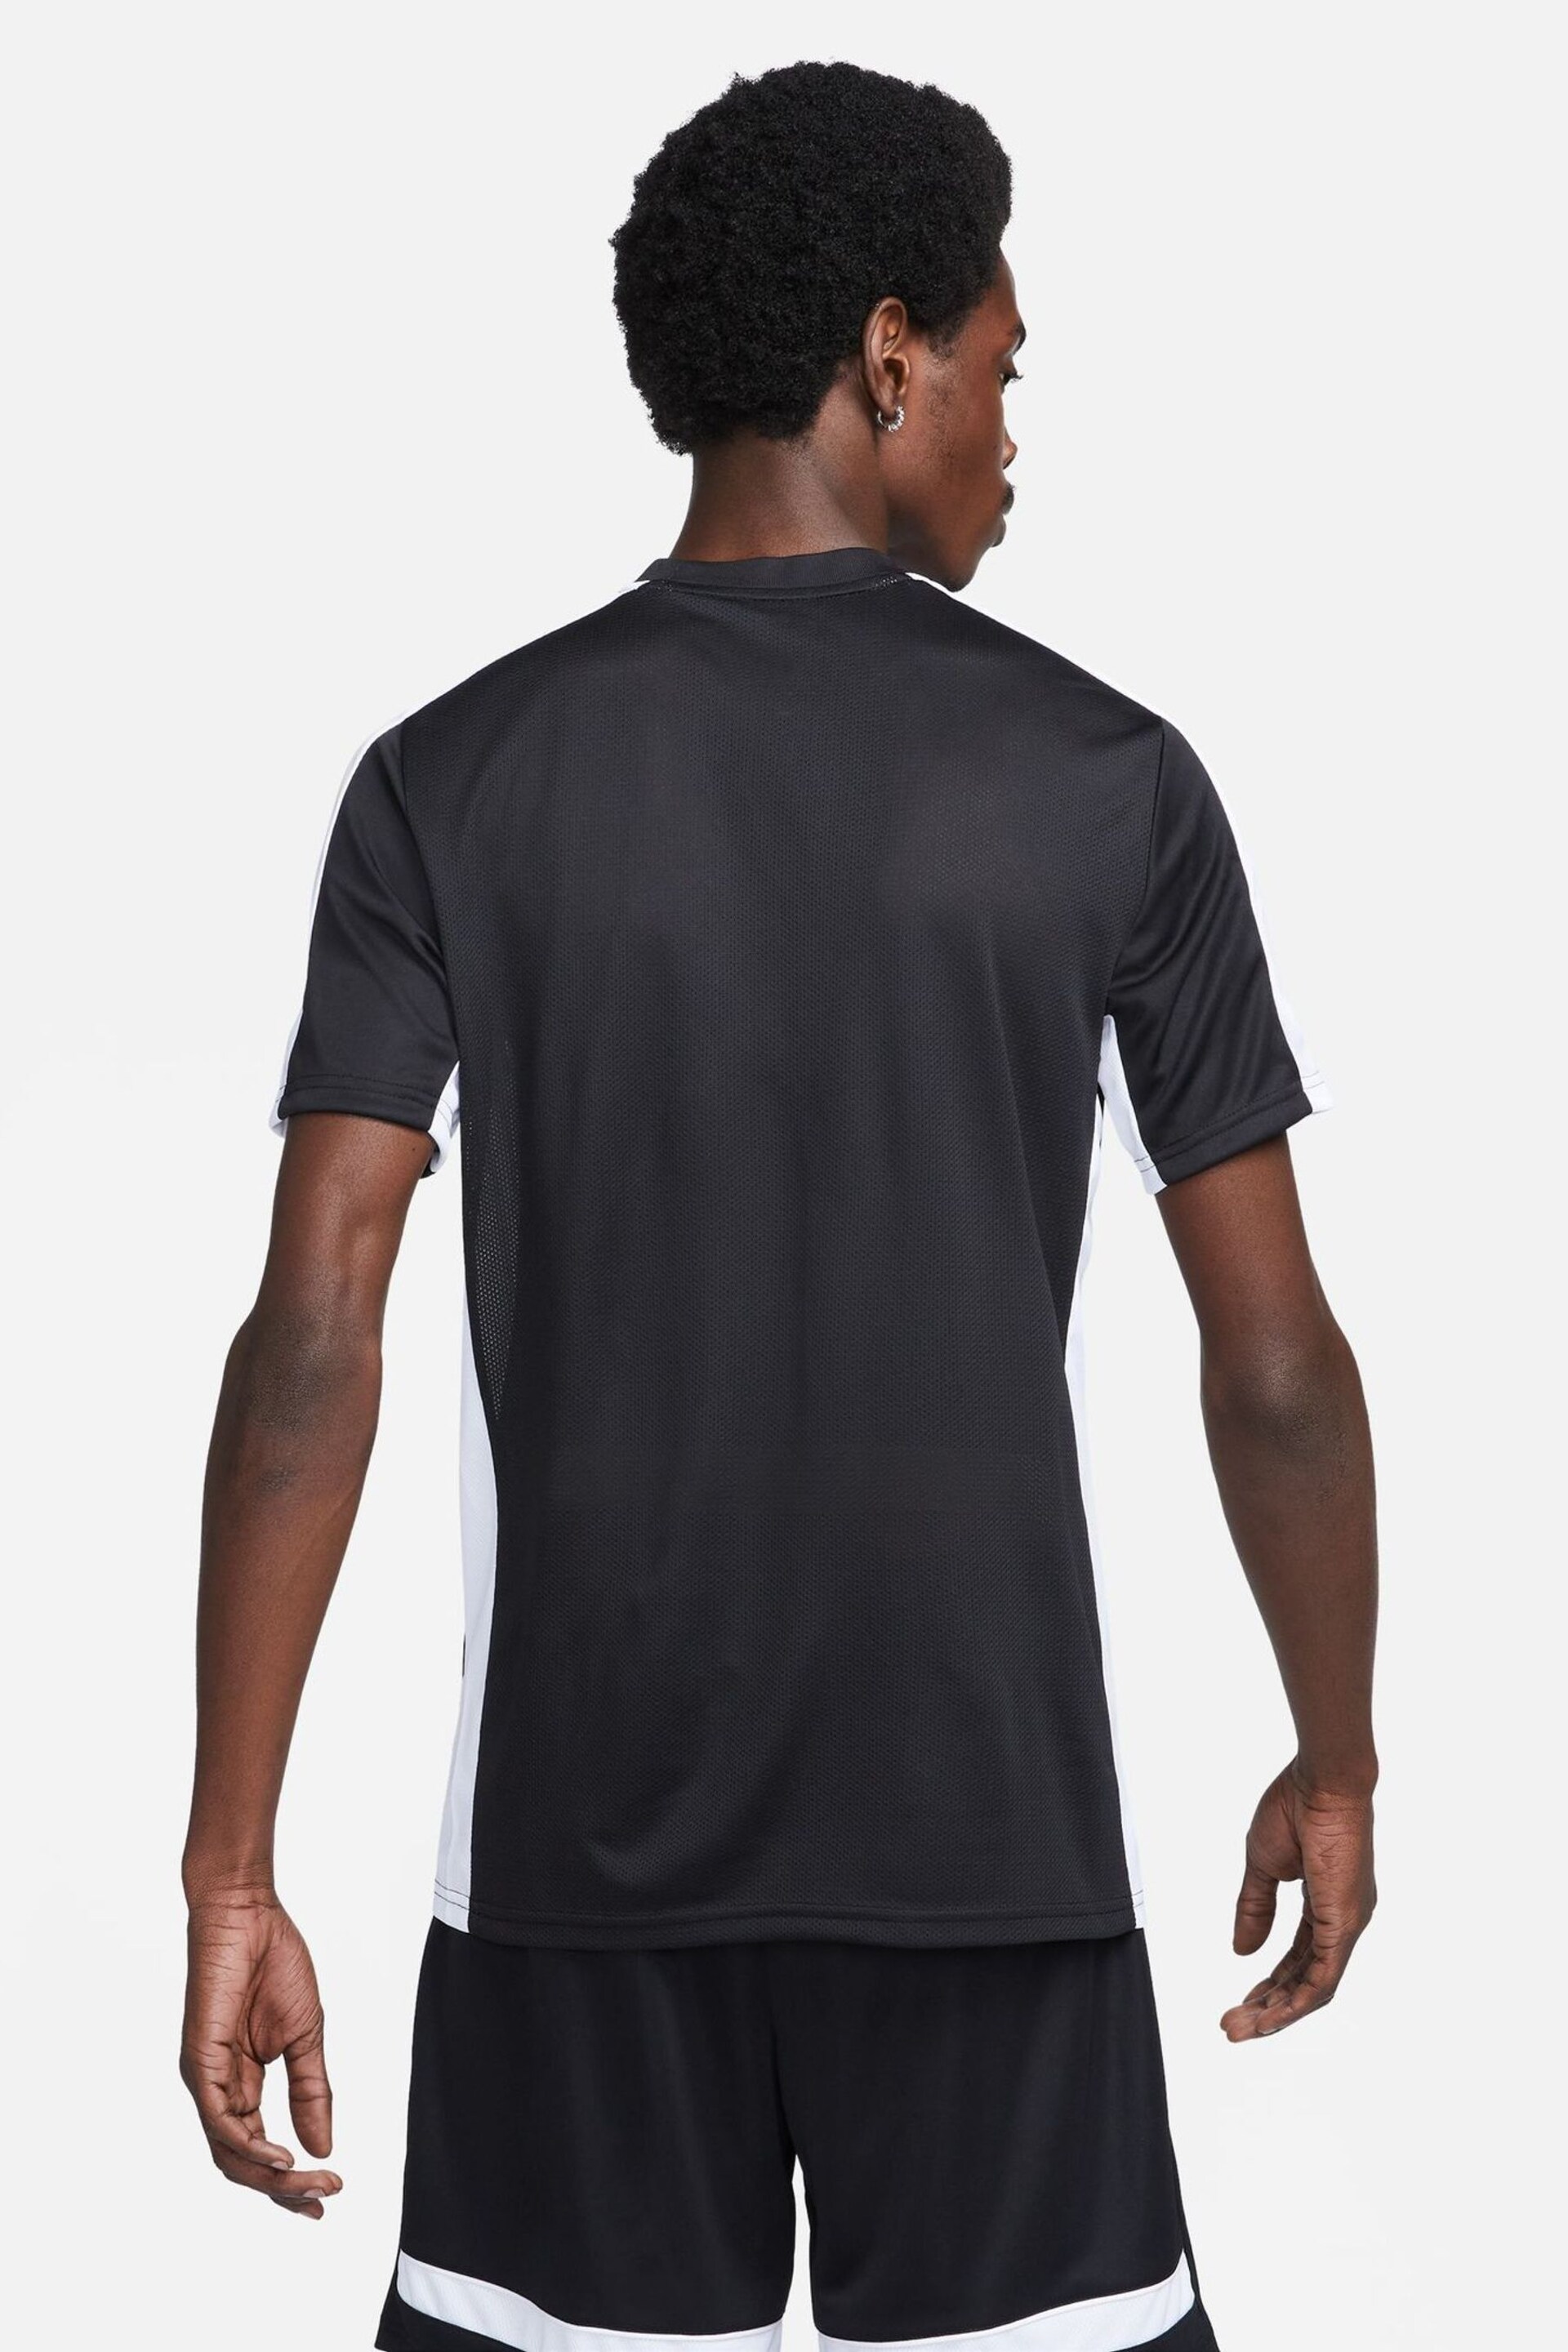 Nike Black Dri-FIT Academy Training T-Shirt - Image 2 of 5